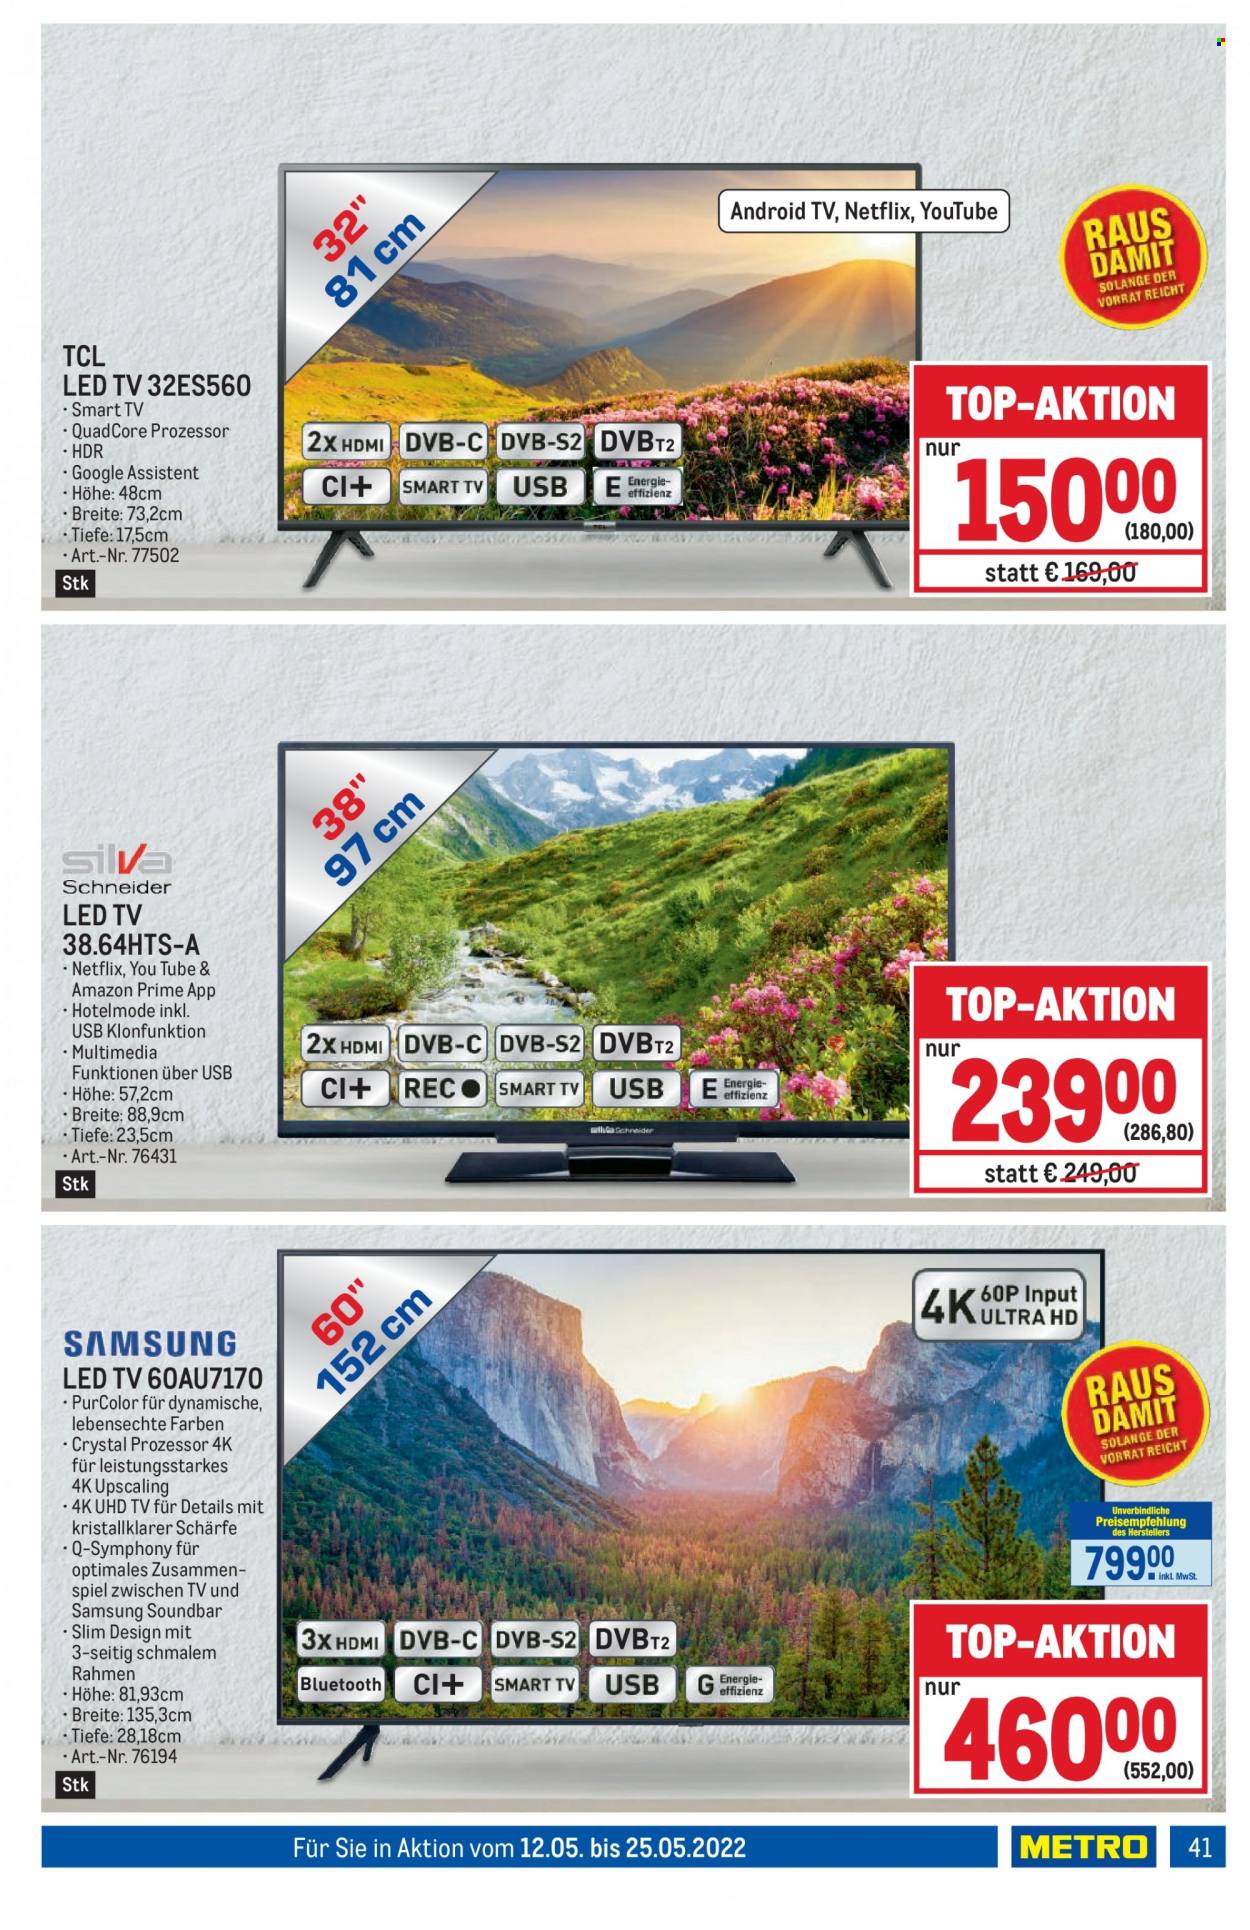 Angebote Metro - 12.5.2022 - 25.5.2022 - Verkaufsprodukte - Samsung, Android TV, UHD-TV, LED TV, Smart TV, Soundbar. Seite 41.